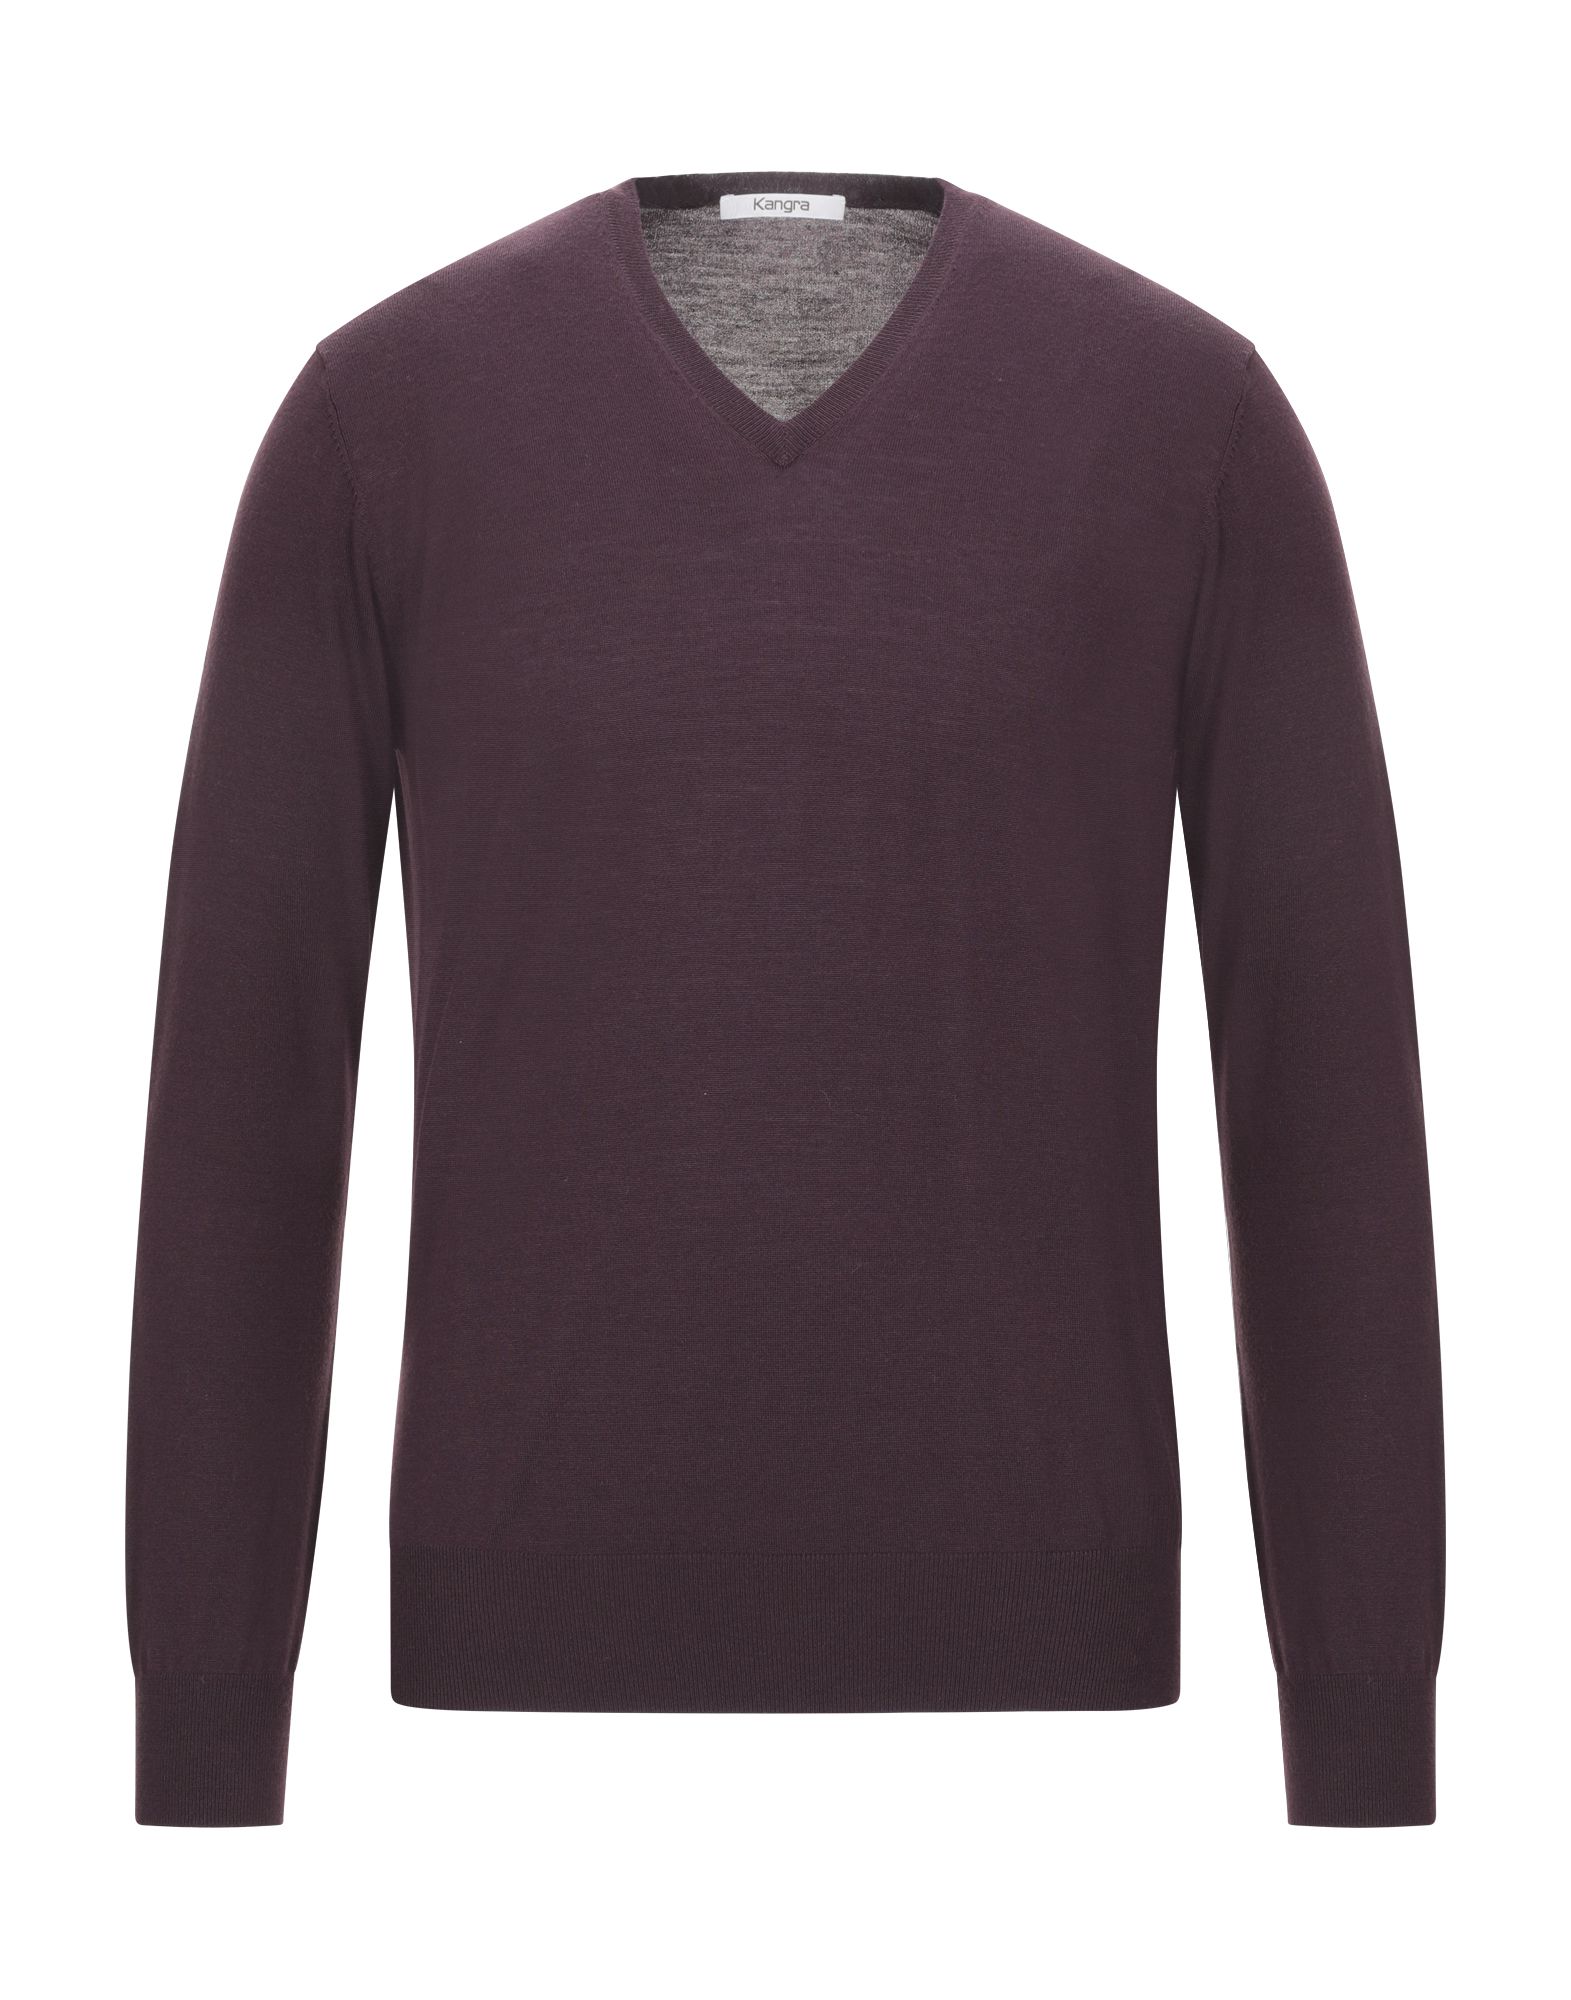 KANGRA CASHMERE Sweaters - Item 14040015